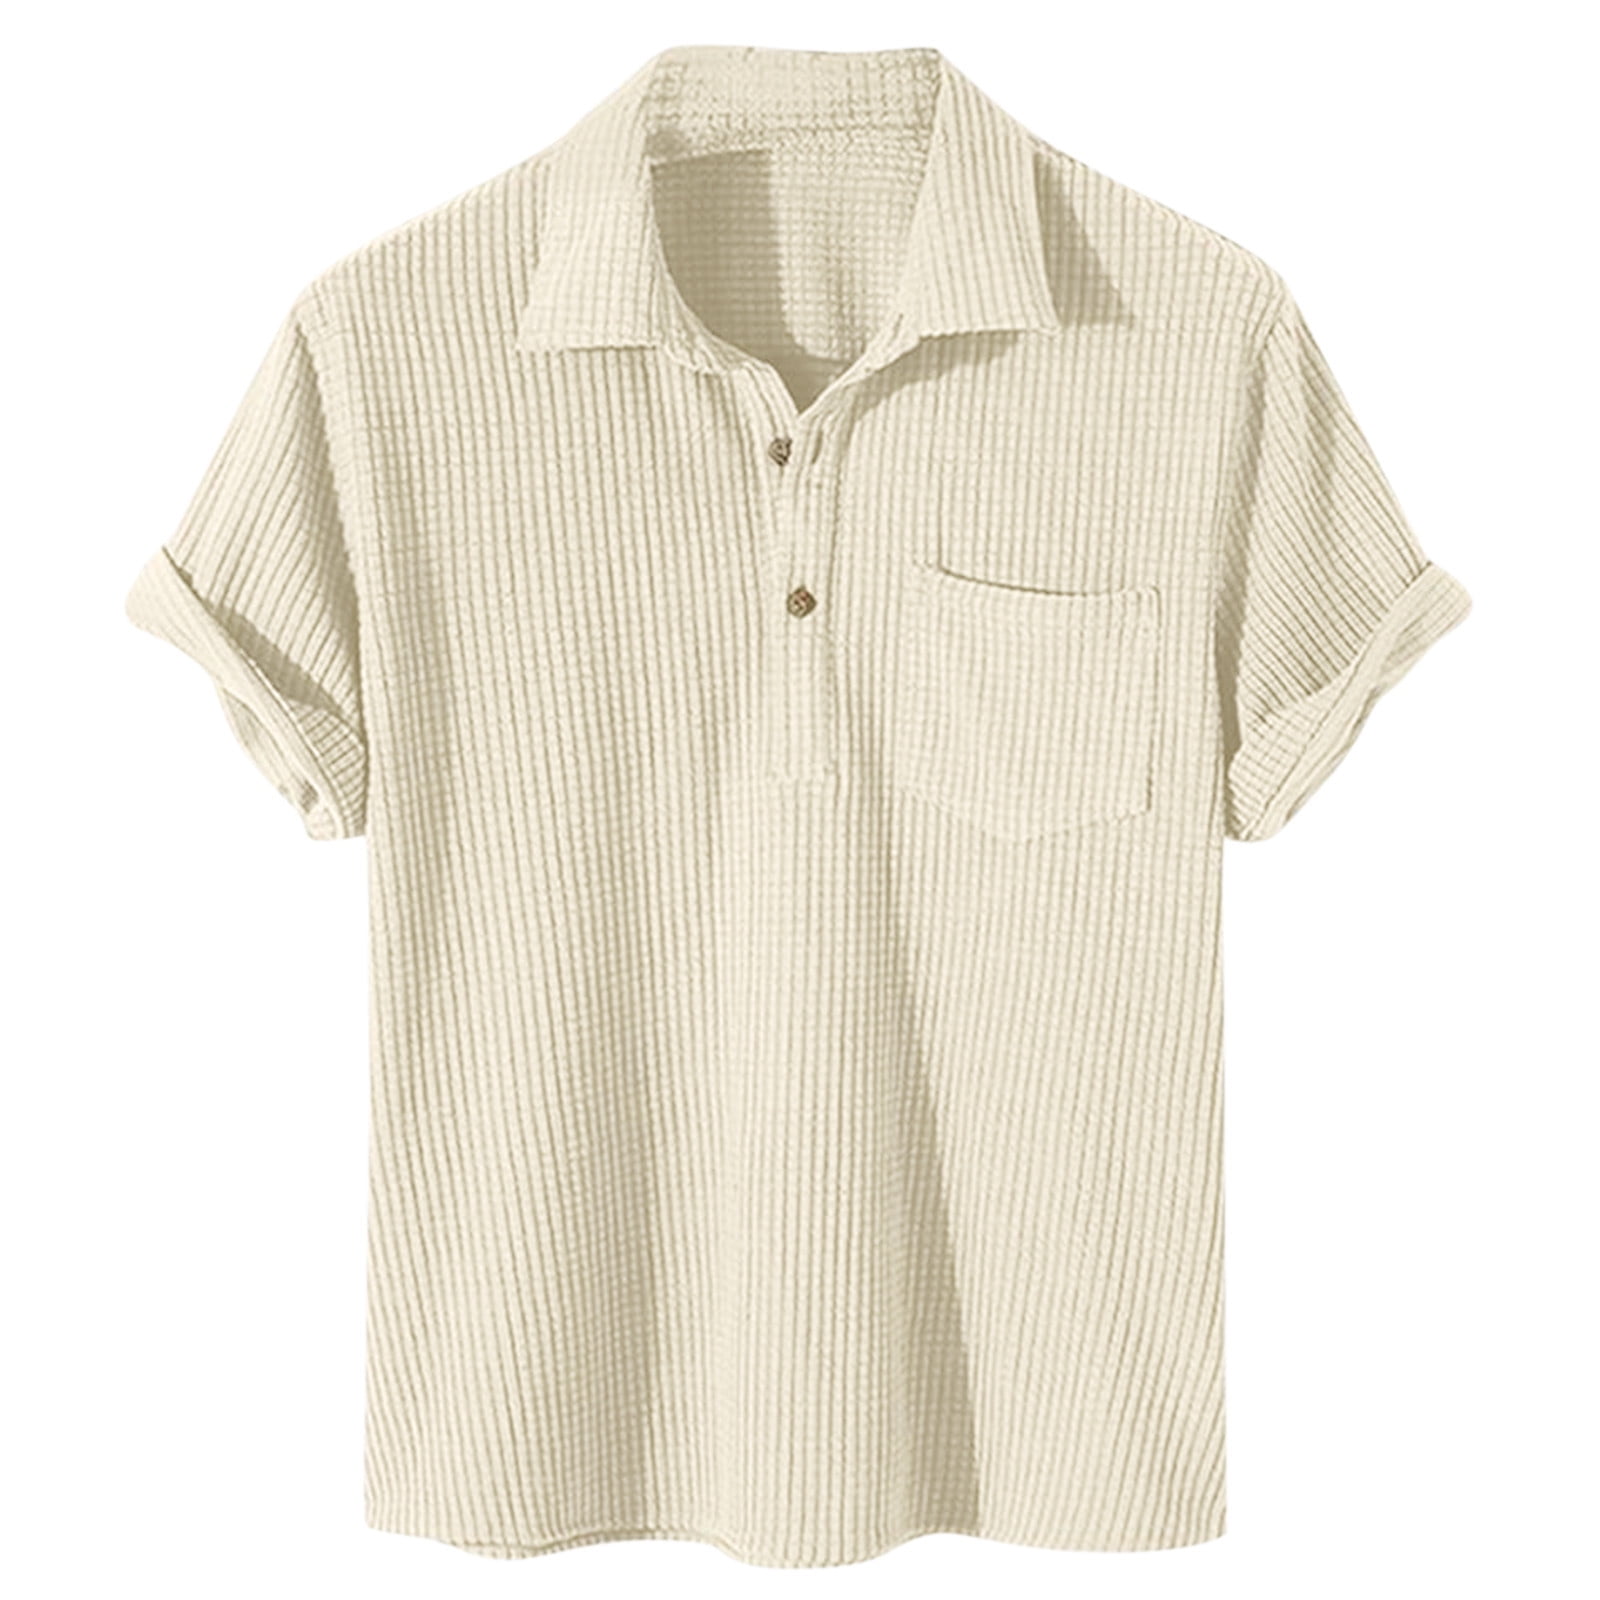 khaki men's polo shirts male casual walf checks solid t shirt